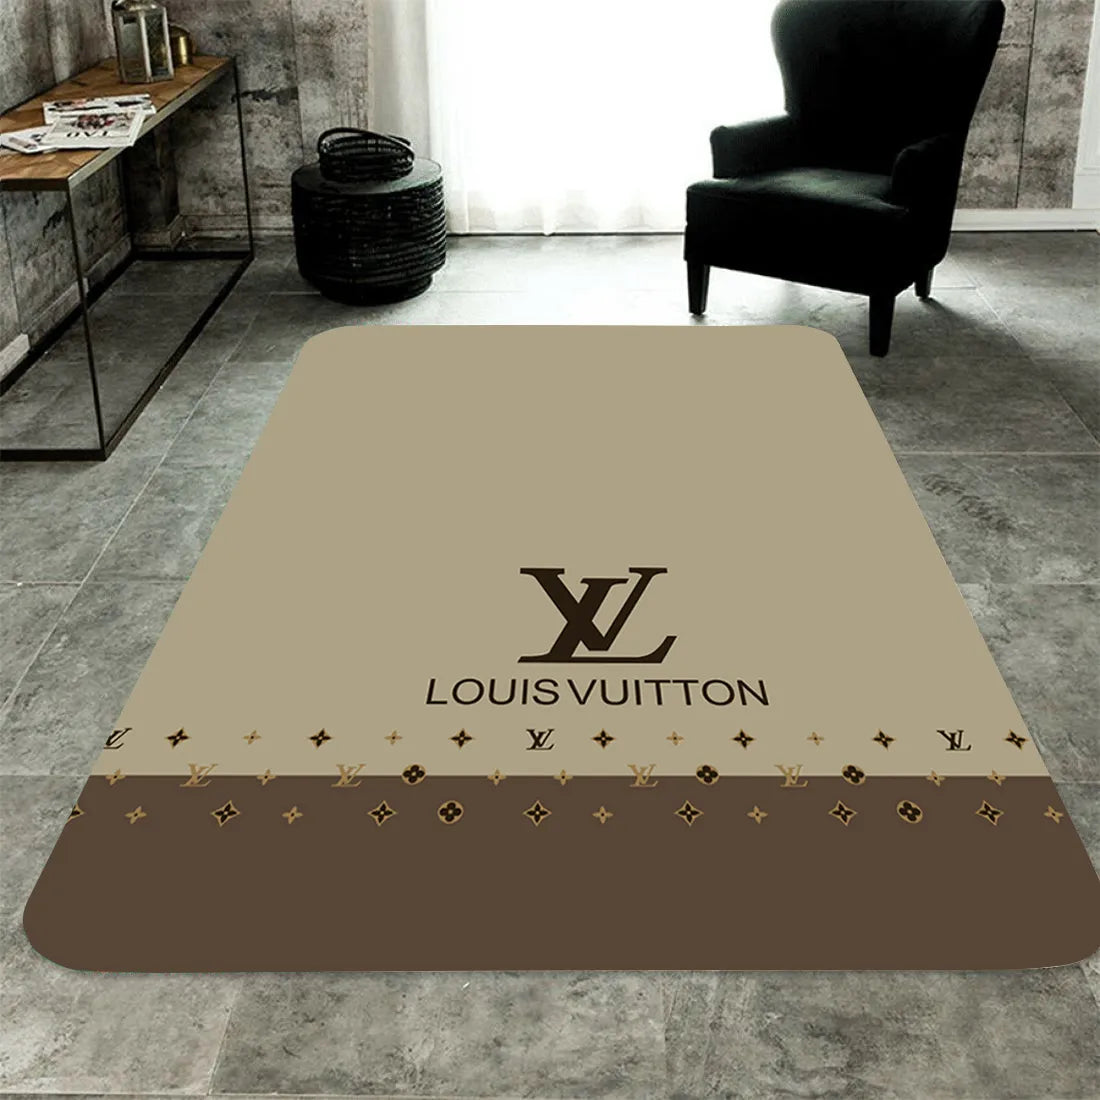 Louis Vuitton Light Grey Luxury Brand Round Rug Carpet Home Decor-105611, by Cootie Shop